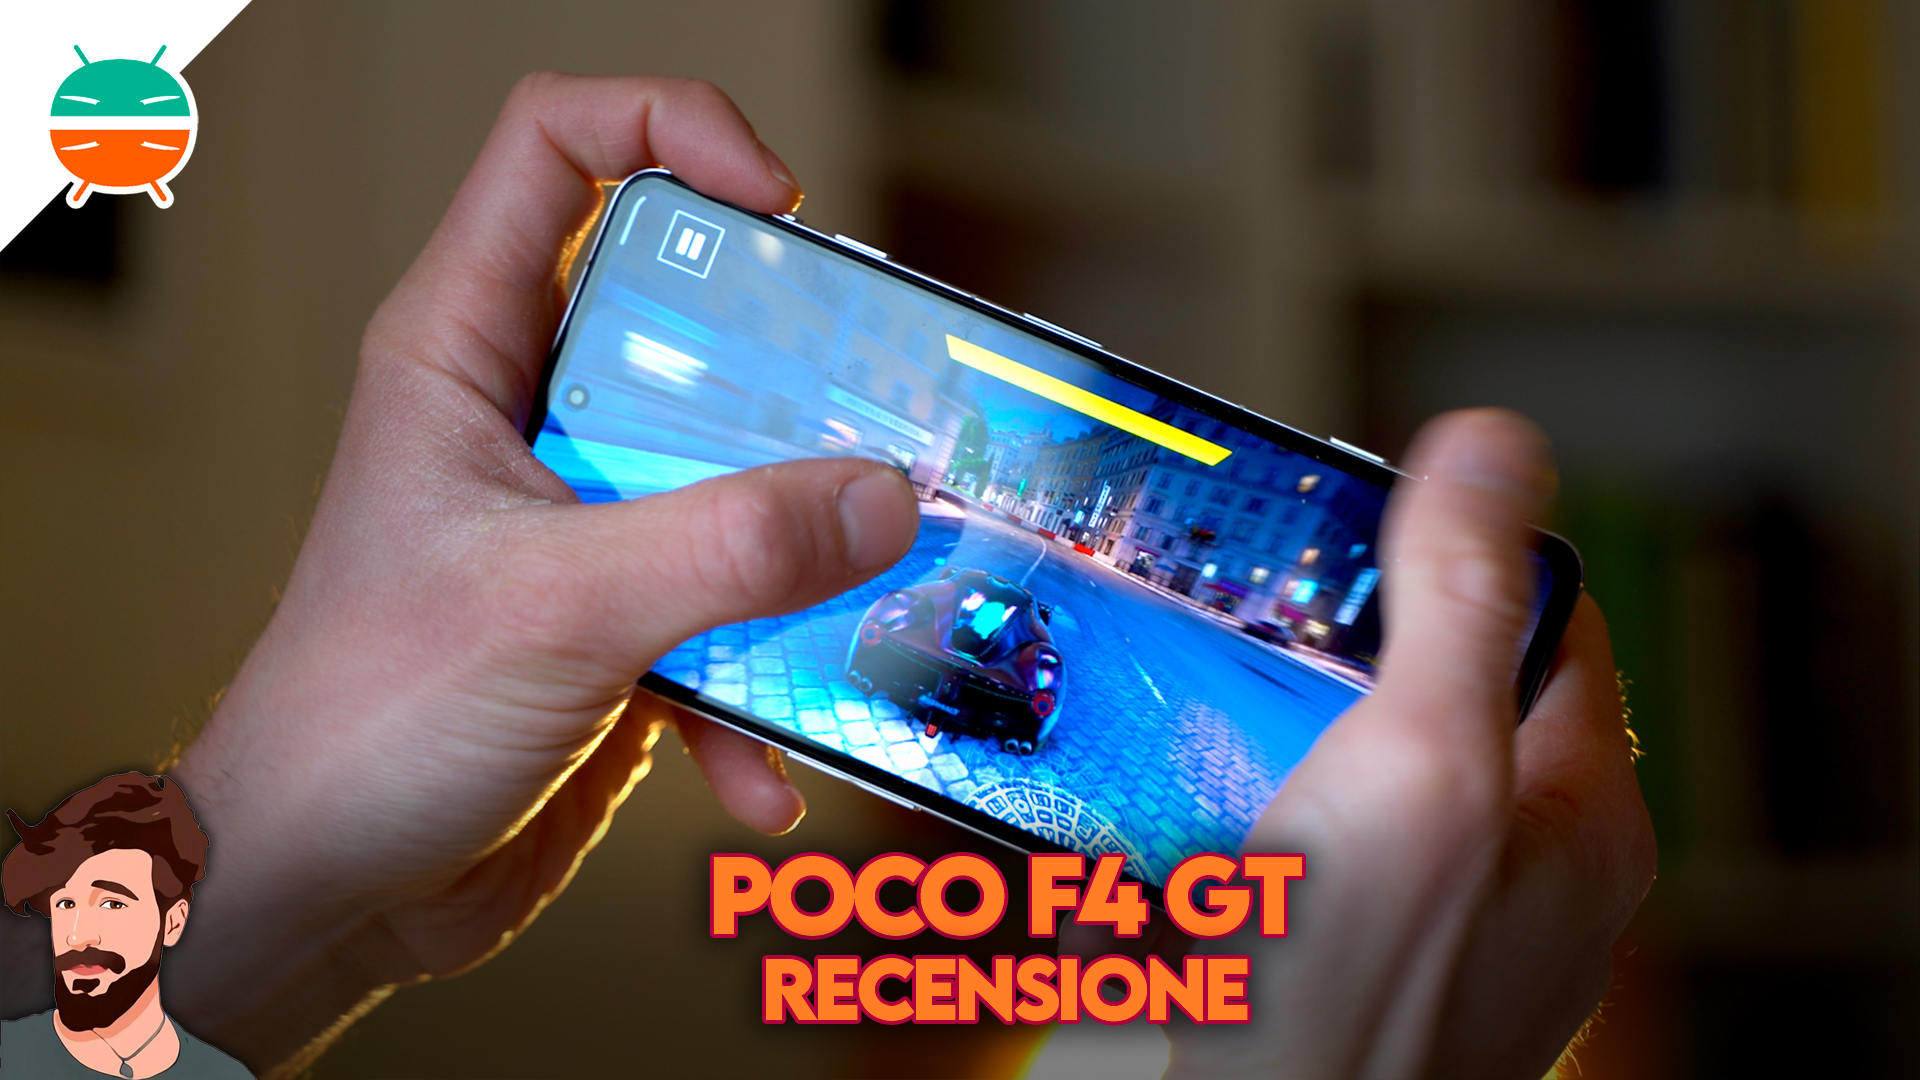 Poco F4 GT smartphone teardown (Video) - Geeky Gadgets